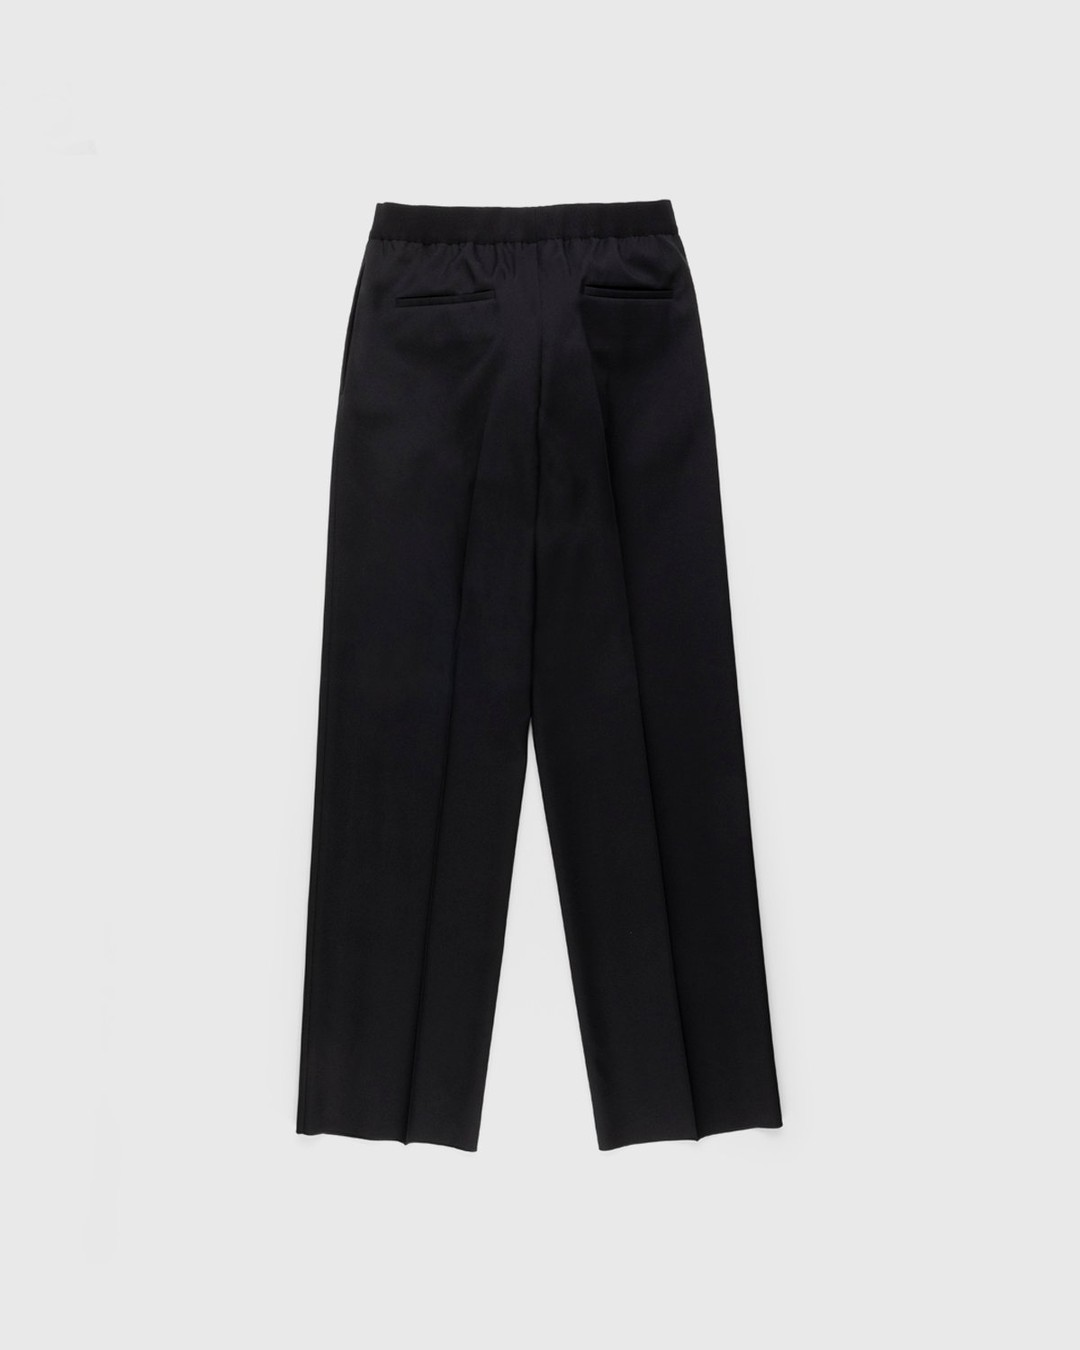 Jil Sander – Polyester Trousers Black - Trousers - Black - Image 2